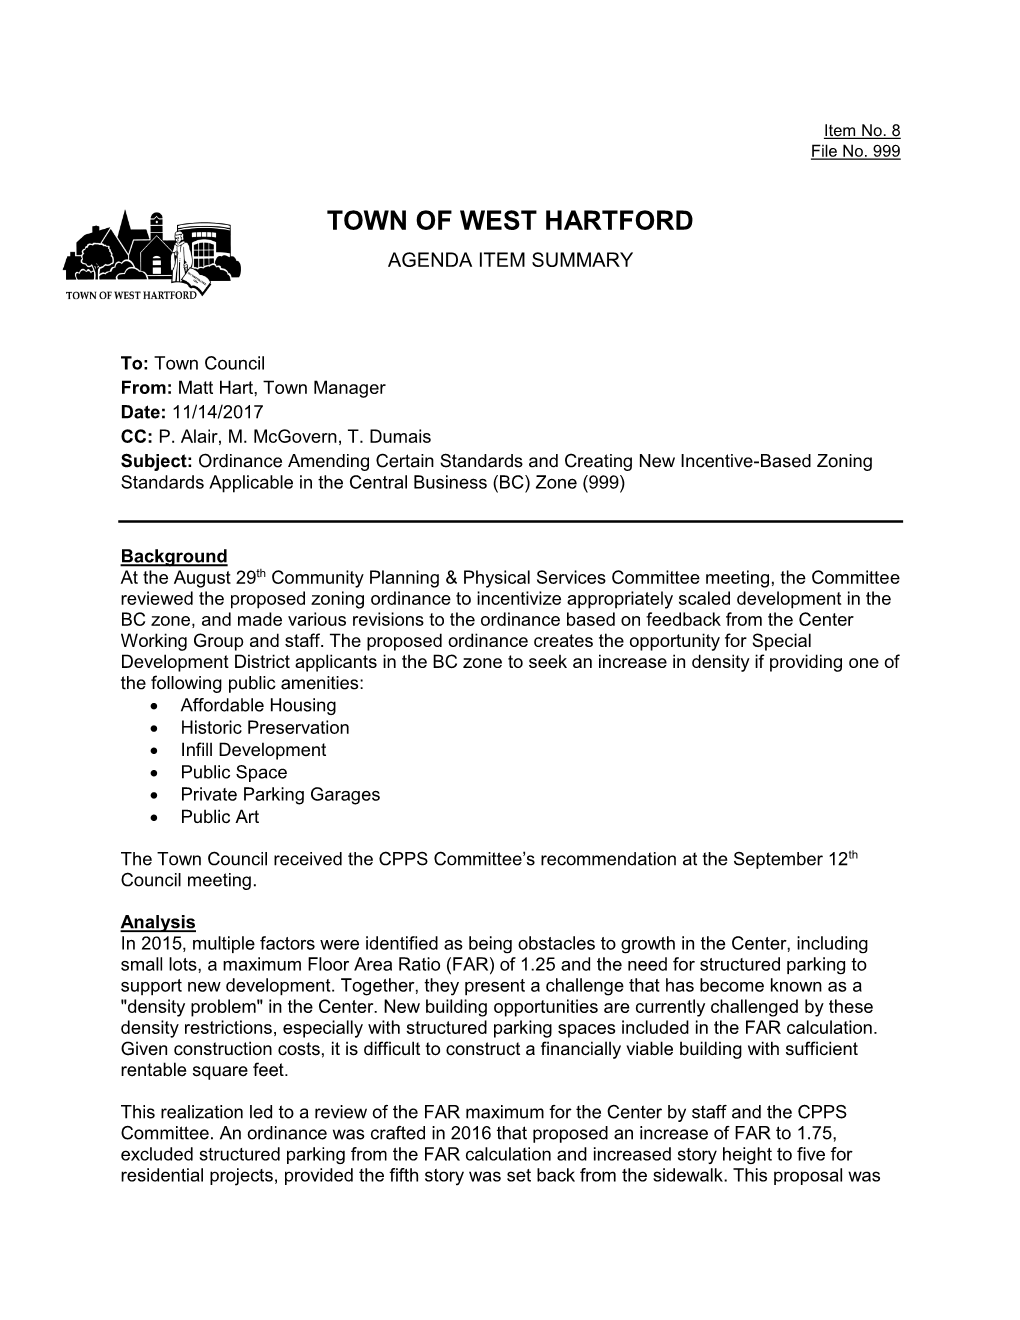 Town of West Hartford Agenda Item Summary